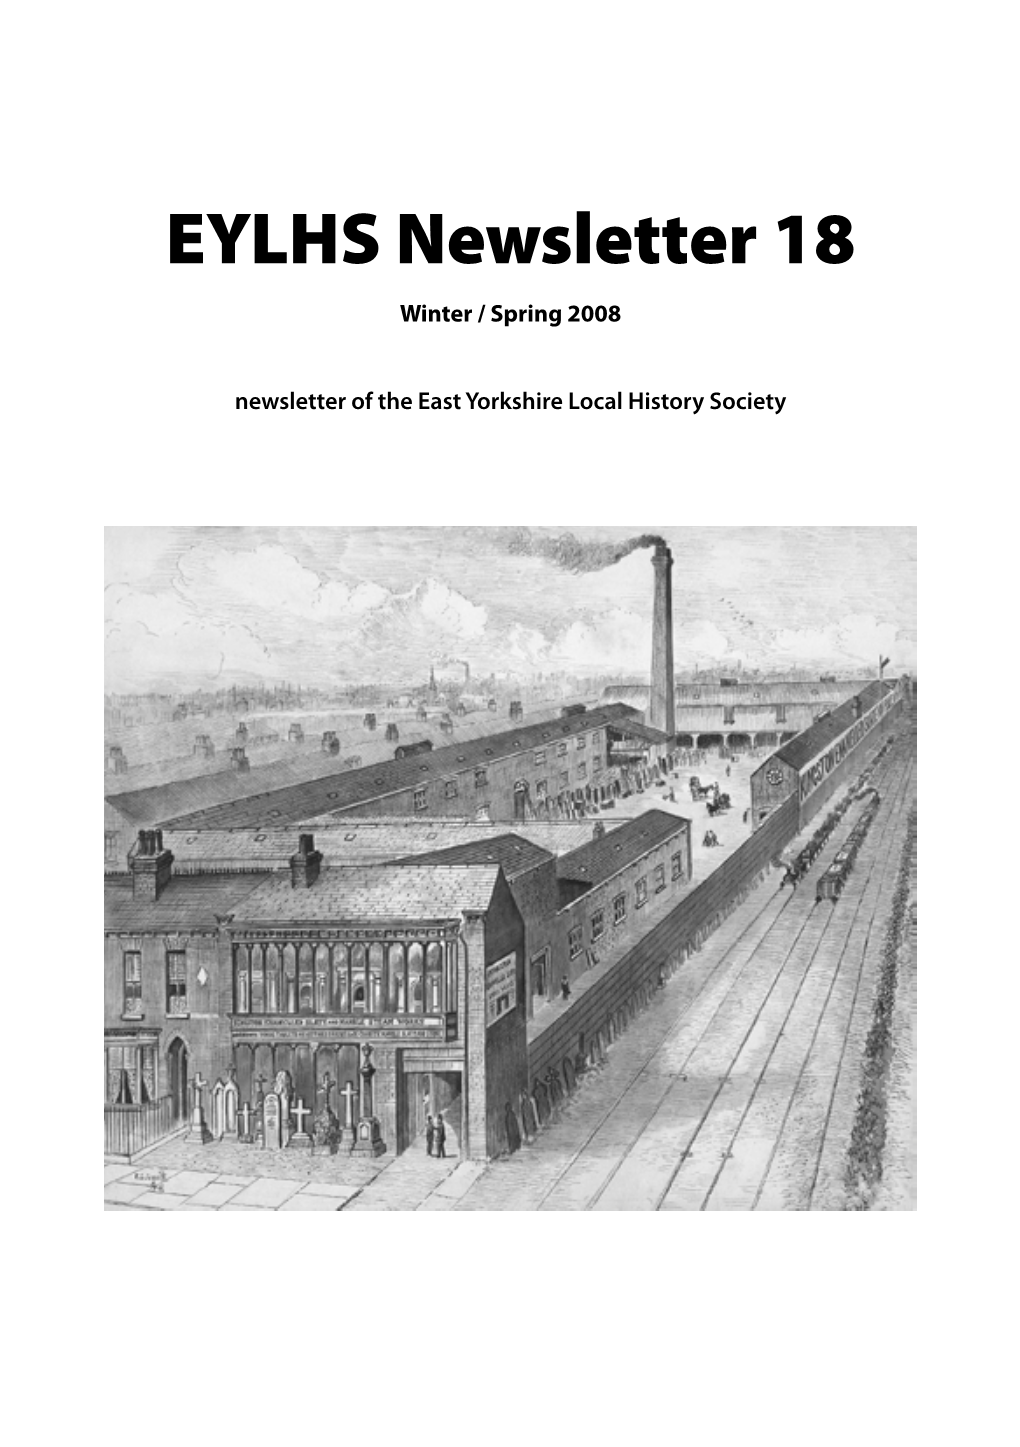 EYLHS Newsletter 18 Winter / Spring 2008